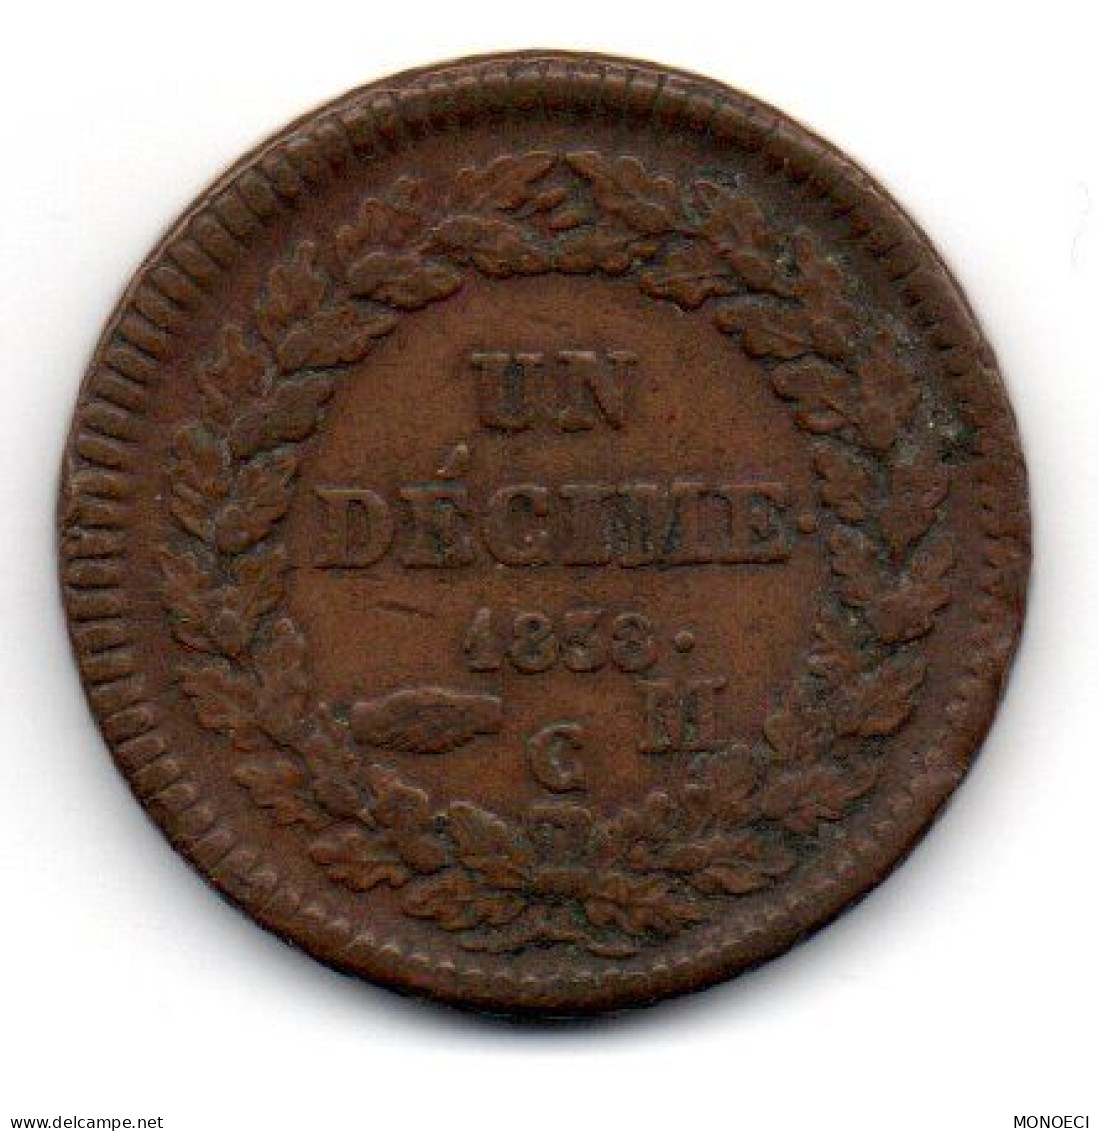 MONACO -- MONTE CARLO -- Pièce Bronze De UN Décime Honoré V - 1819-1922 Onorato V, Carlo III, Alberto I